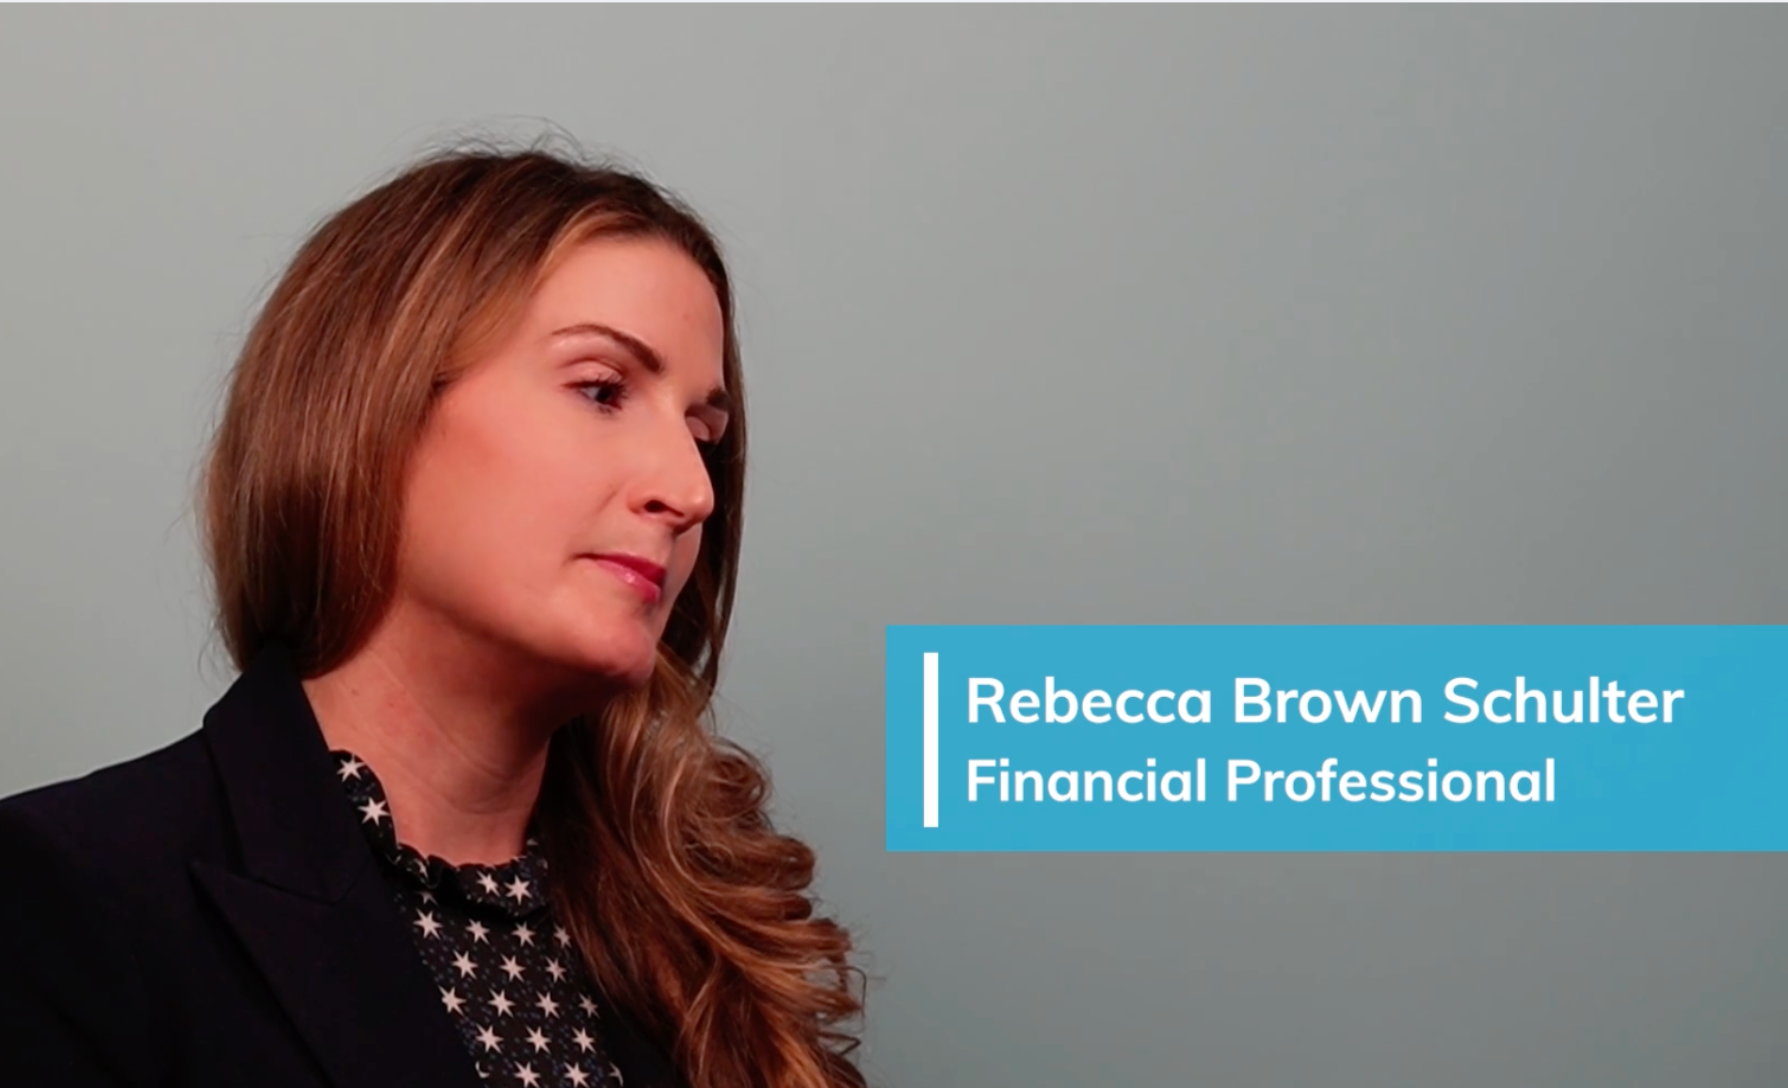 RebeccaBrownSchulter_FinancialProfessional